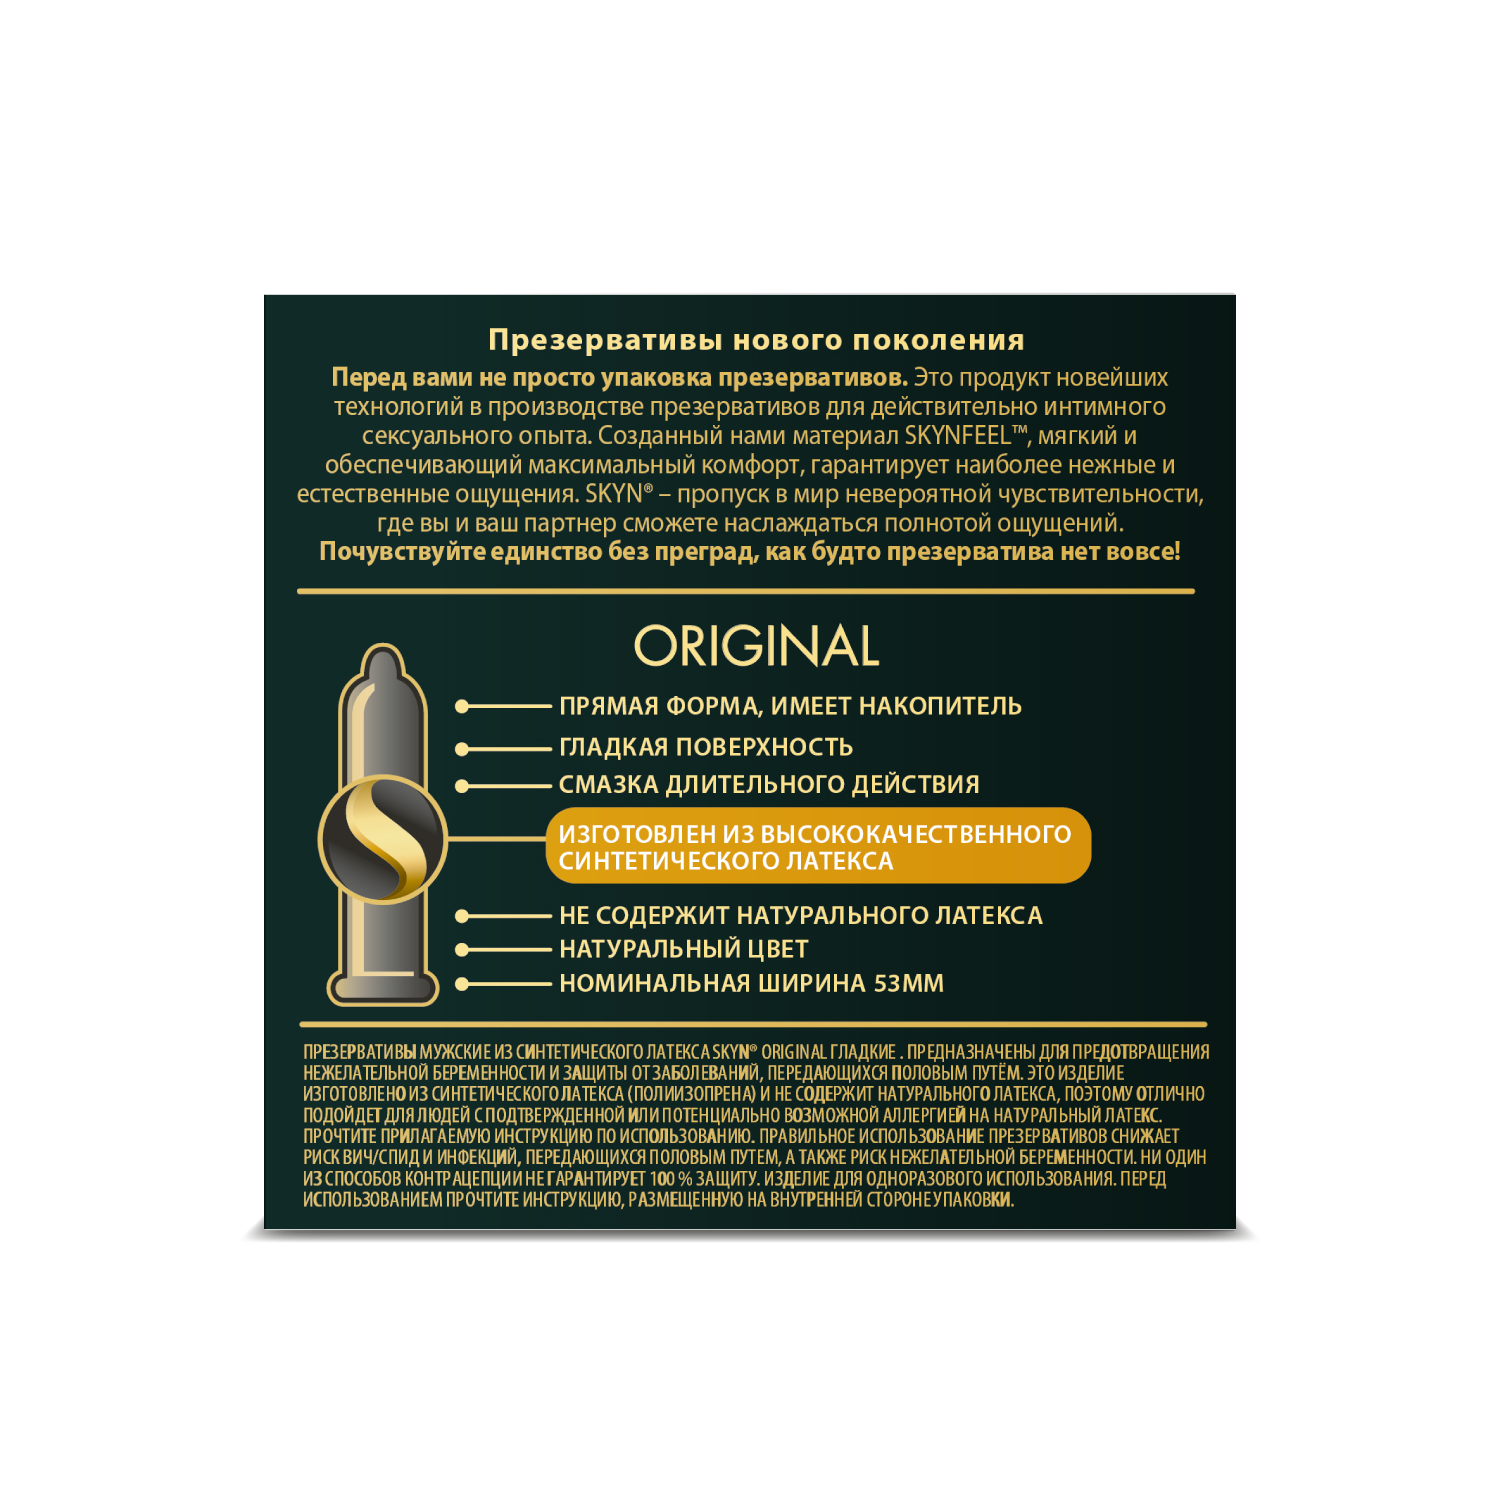 Скин Ориджинал презервативы из синтетического латекса классические №3 от РИГЛА